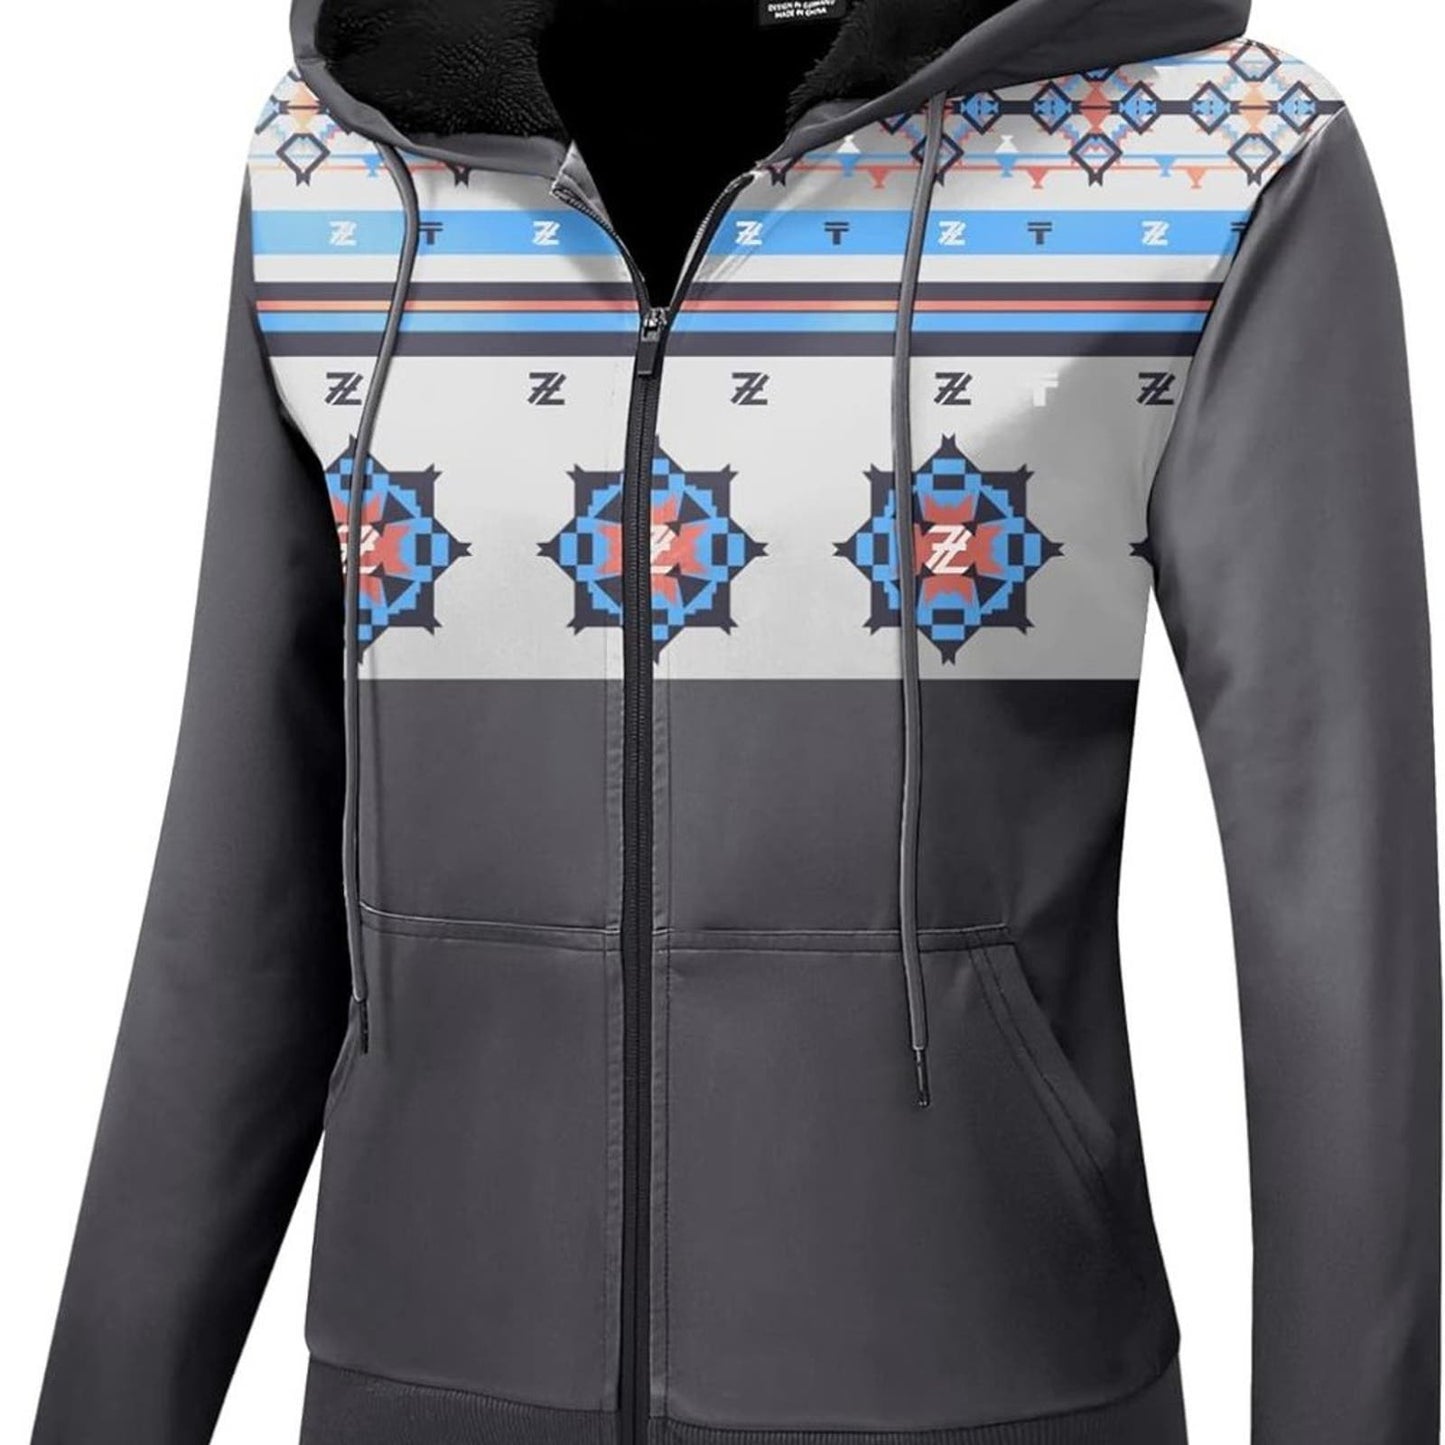 JACKETOWN Zip Up Hoodies for Women Warm Fall Winter Fleece Jacket Casual Hooded